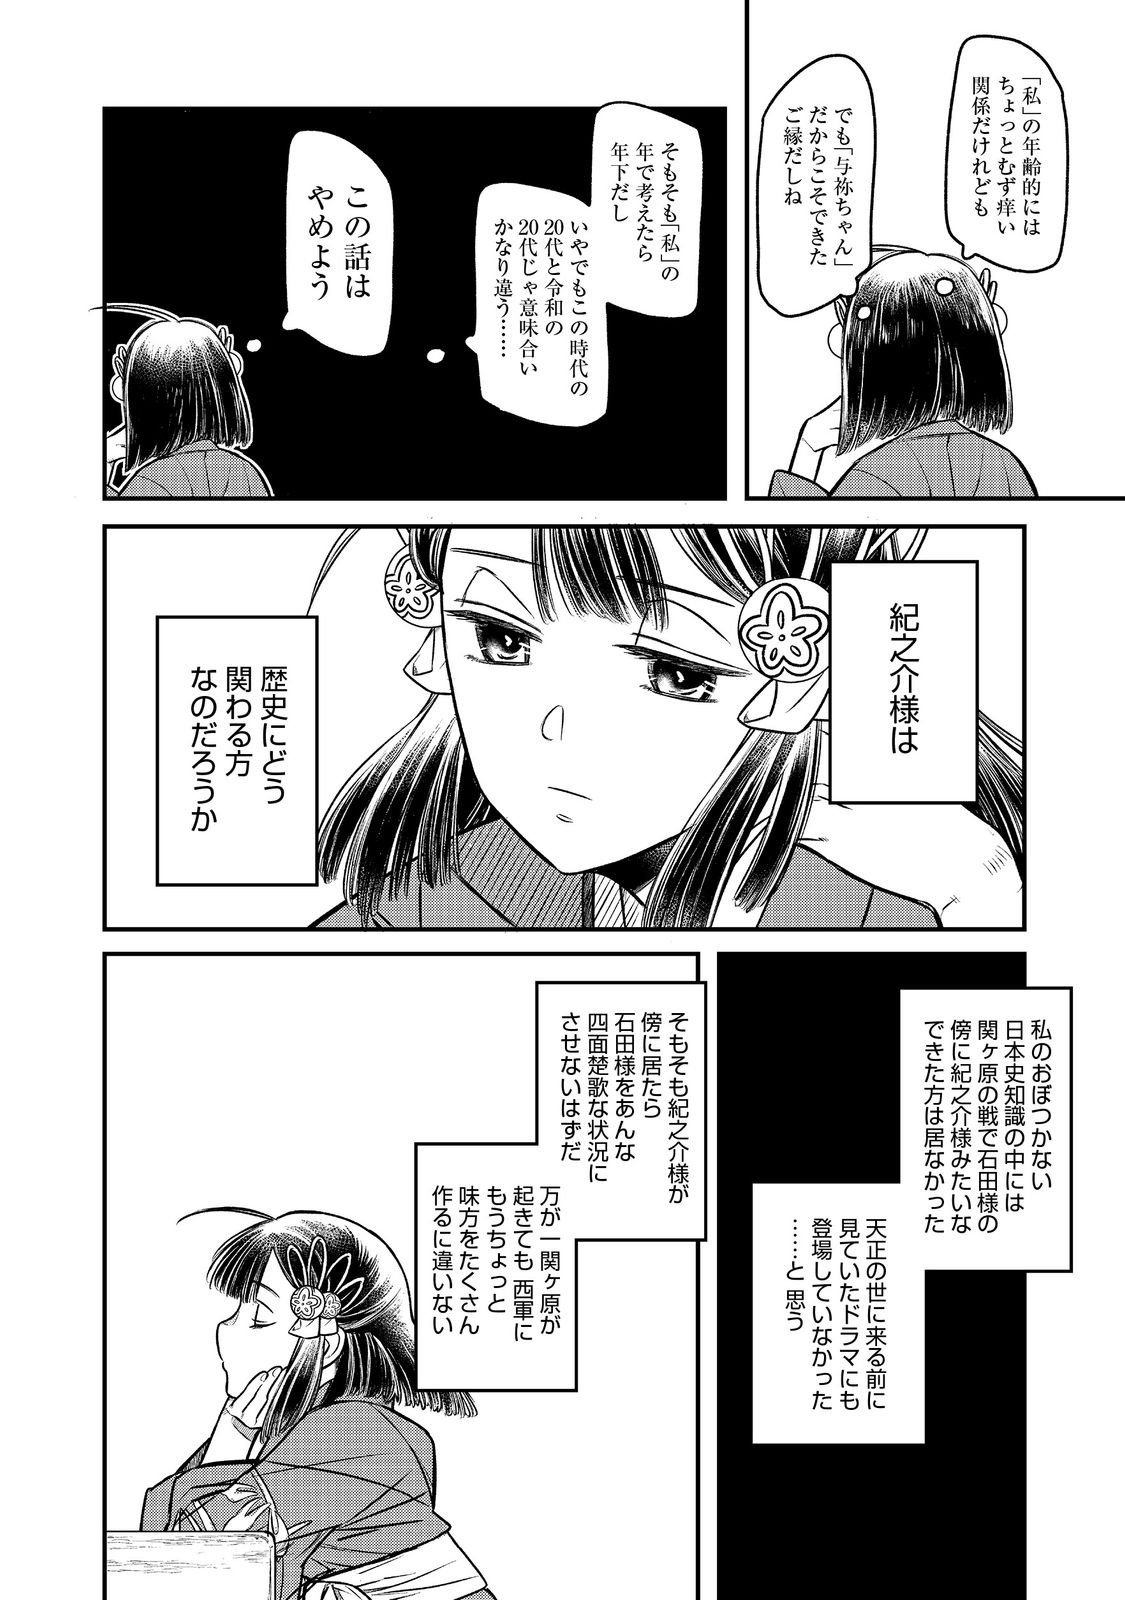 Kitanomandokoro-sama no Okeshougakari - Chapter 8.1 - Page 14